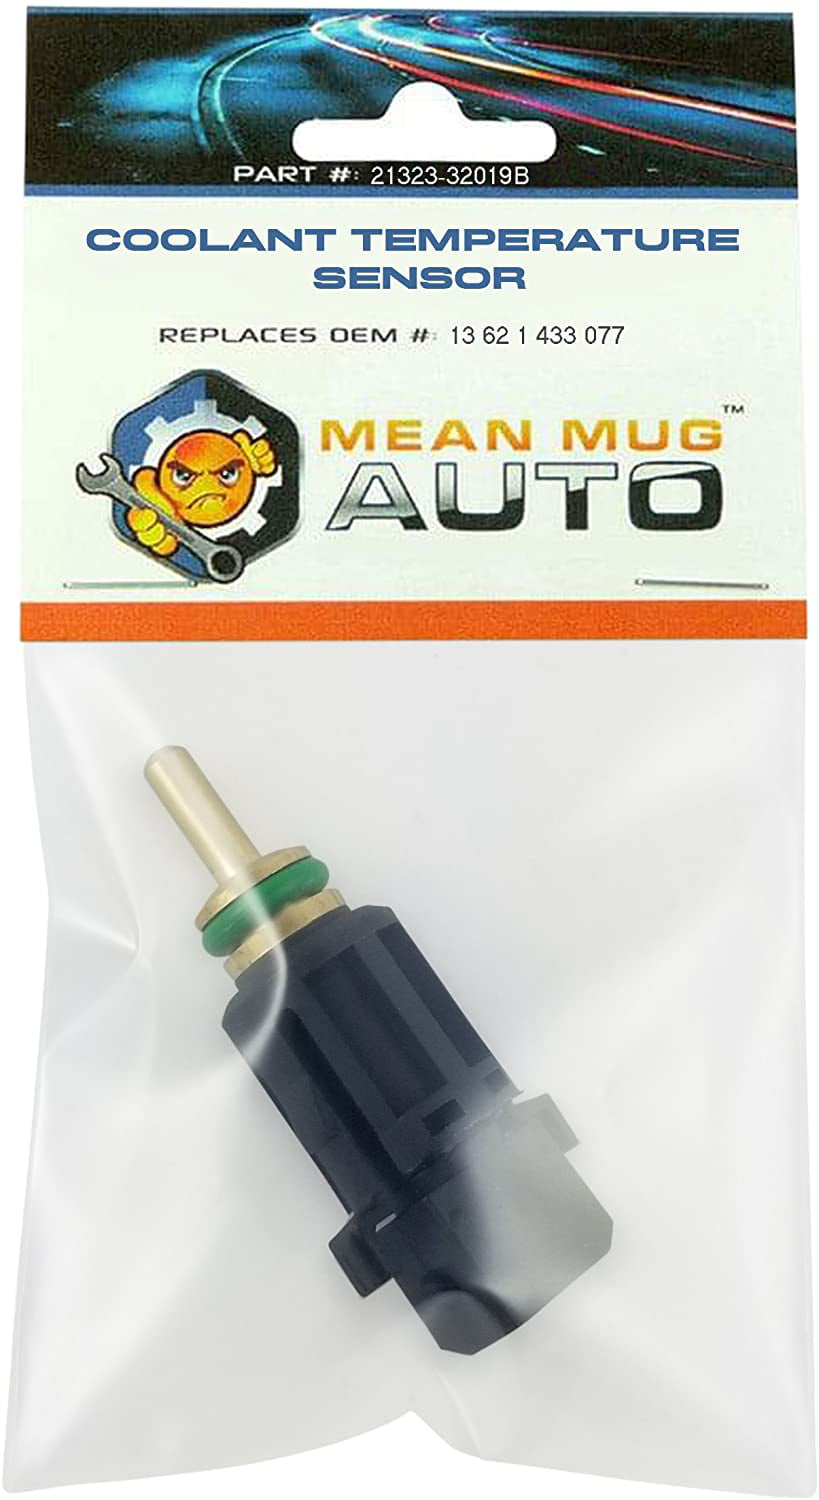 Replaces OEM #: TS10198 For: Toyota Lexus & More Mean Mug Auto 201525-32019A Engine Coolant Temperature Sensor